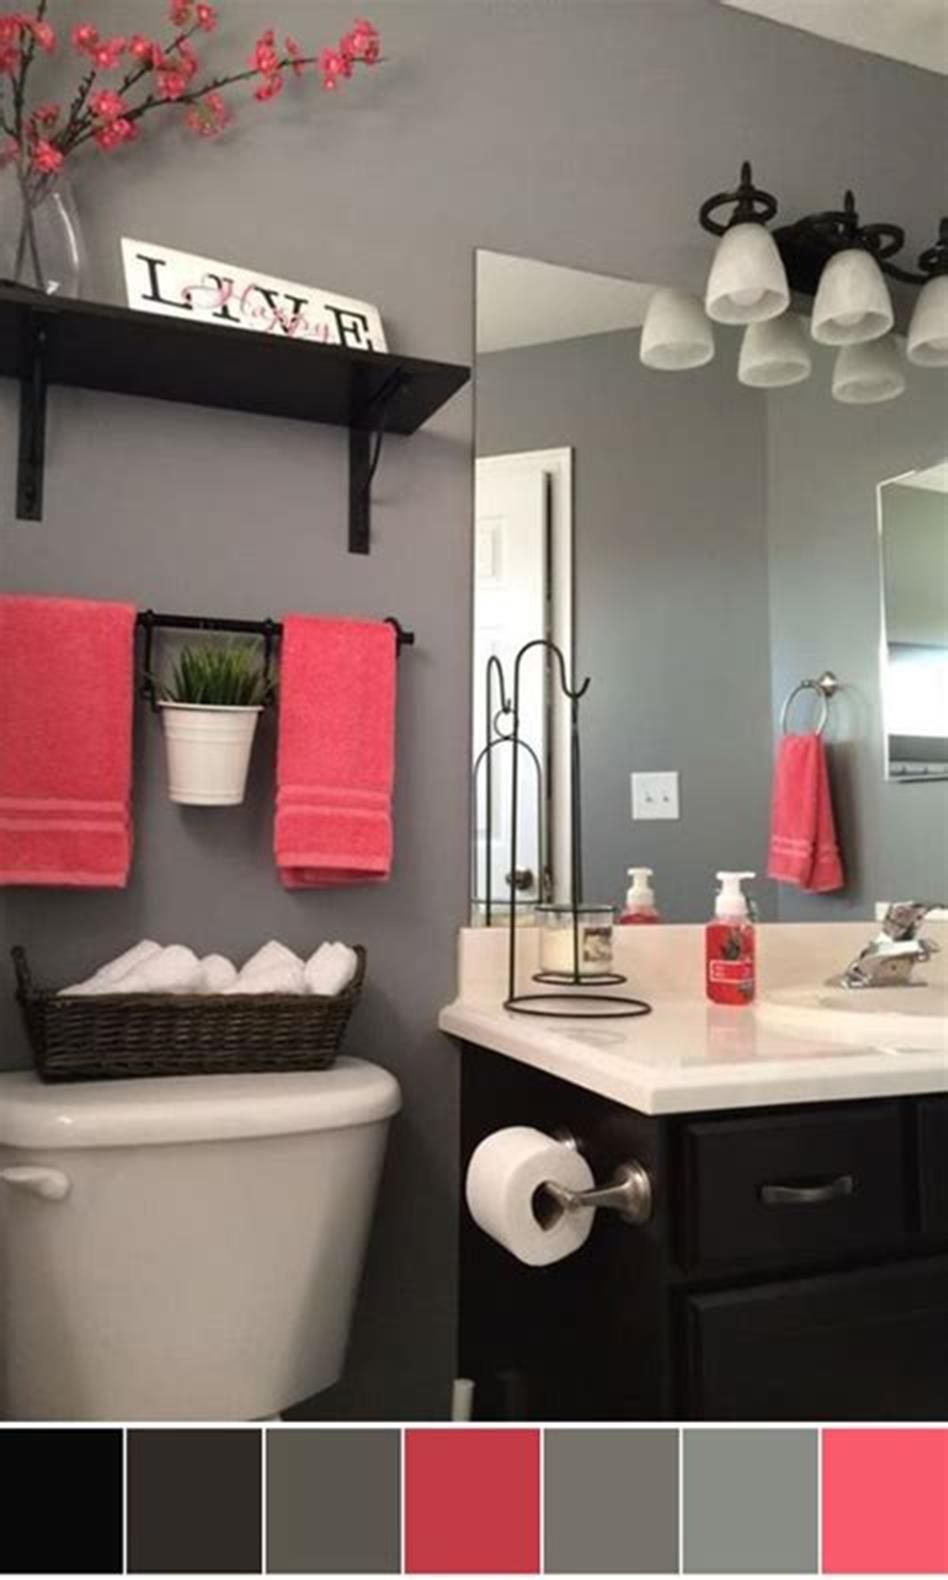 40 Best Color Schemes Bathroom Decorating Ideas on a Budget 2019 31 – ViraLinspirationS